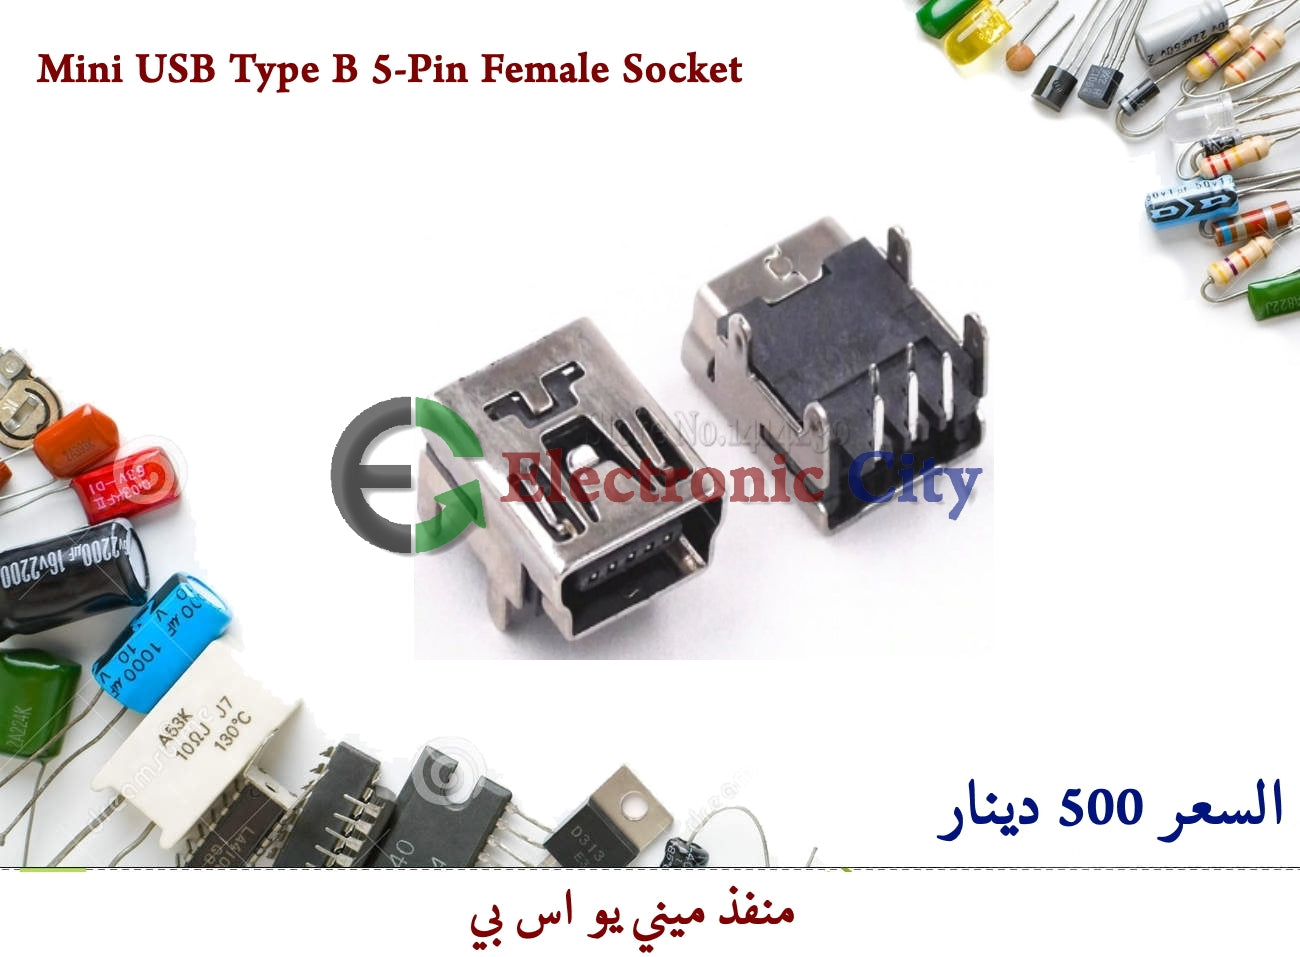 Mini USB Type B 5-Pin Female Socket